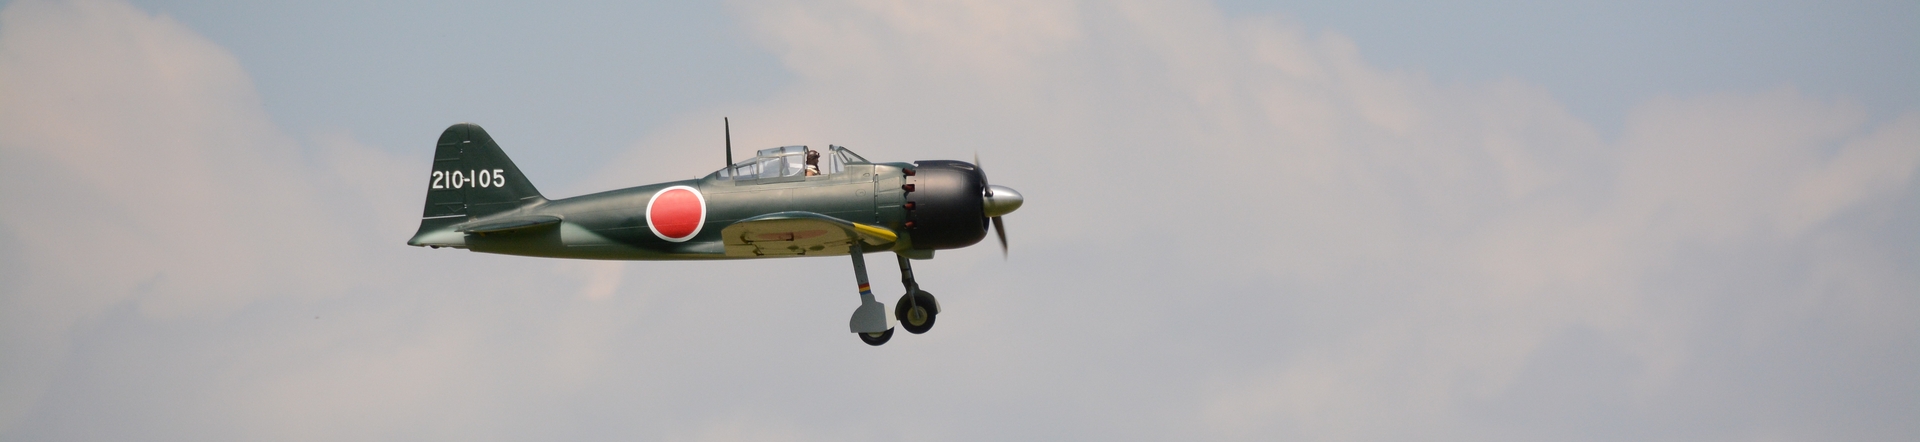 Modellflugzeug Warbird